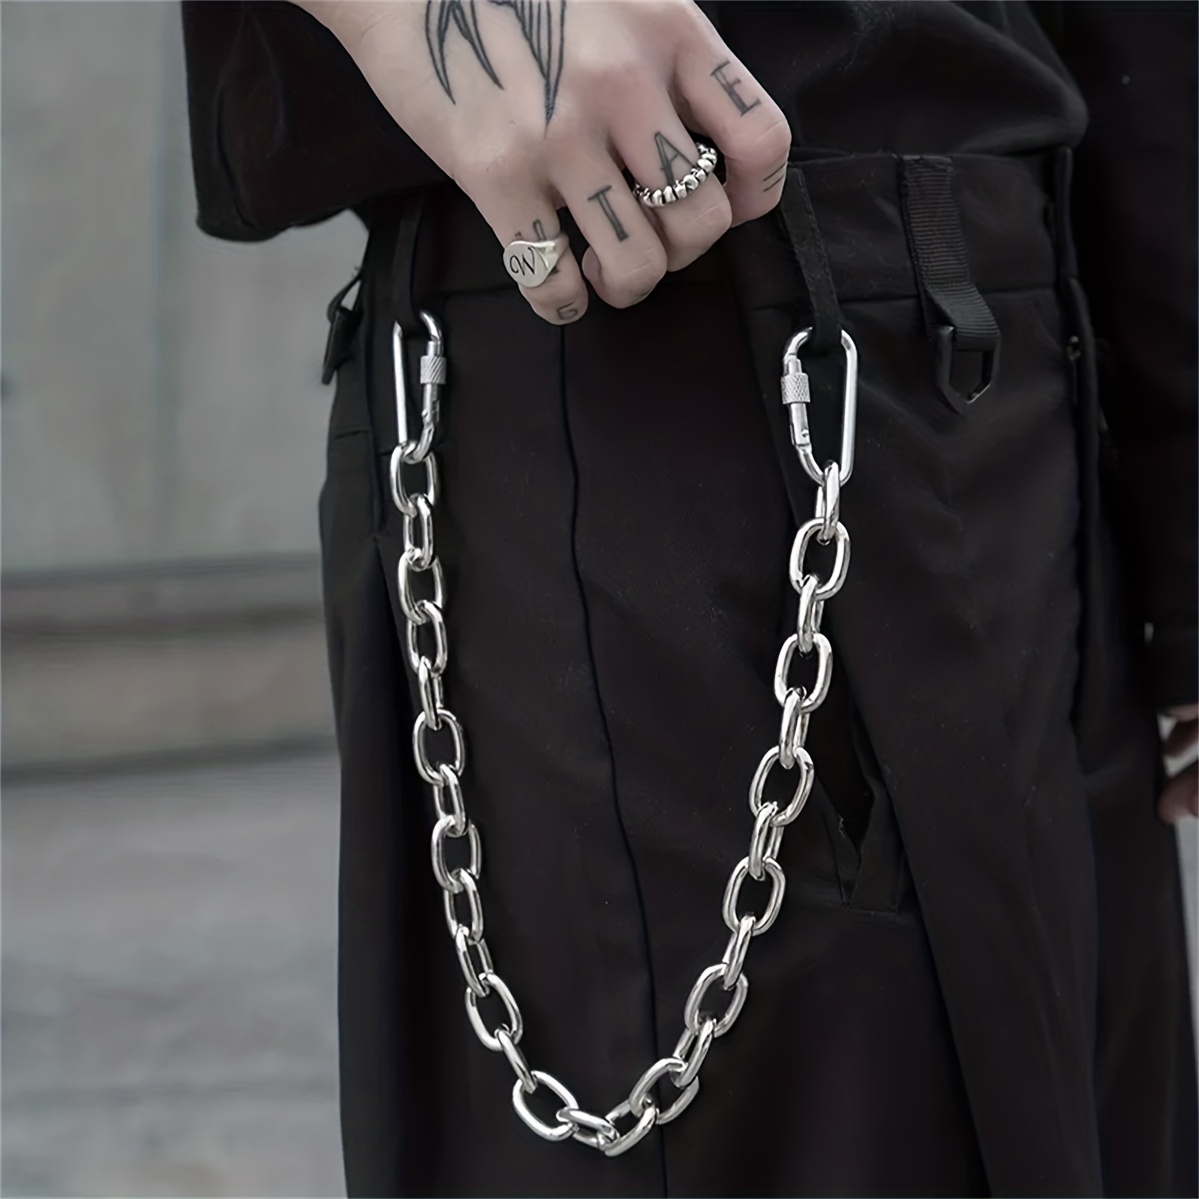 LunaMeeDesigns Kpop Belt Chain, Pocket Chain, Concert Pocket Chain, Punk Cool Pants Chain Fashion, Metal Jeans Chain